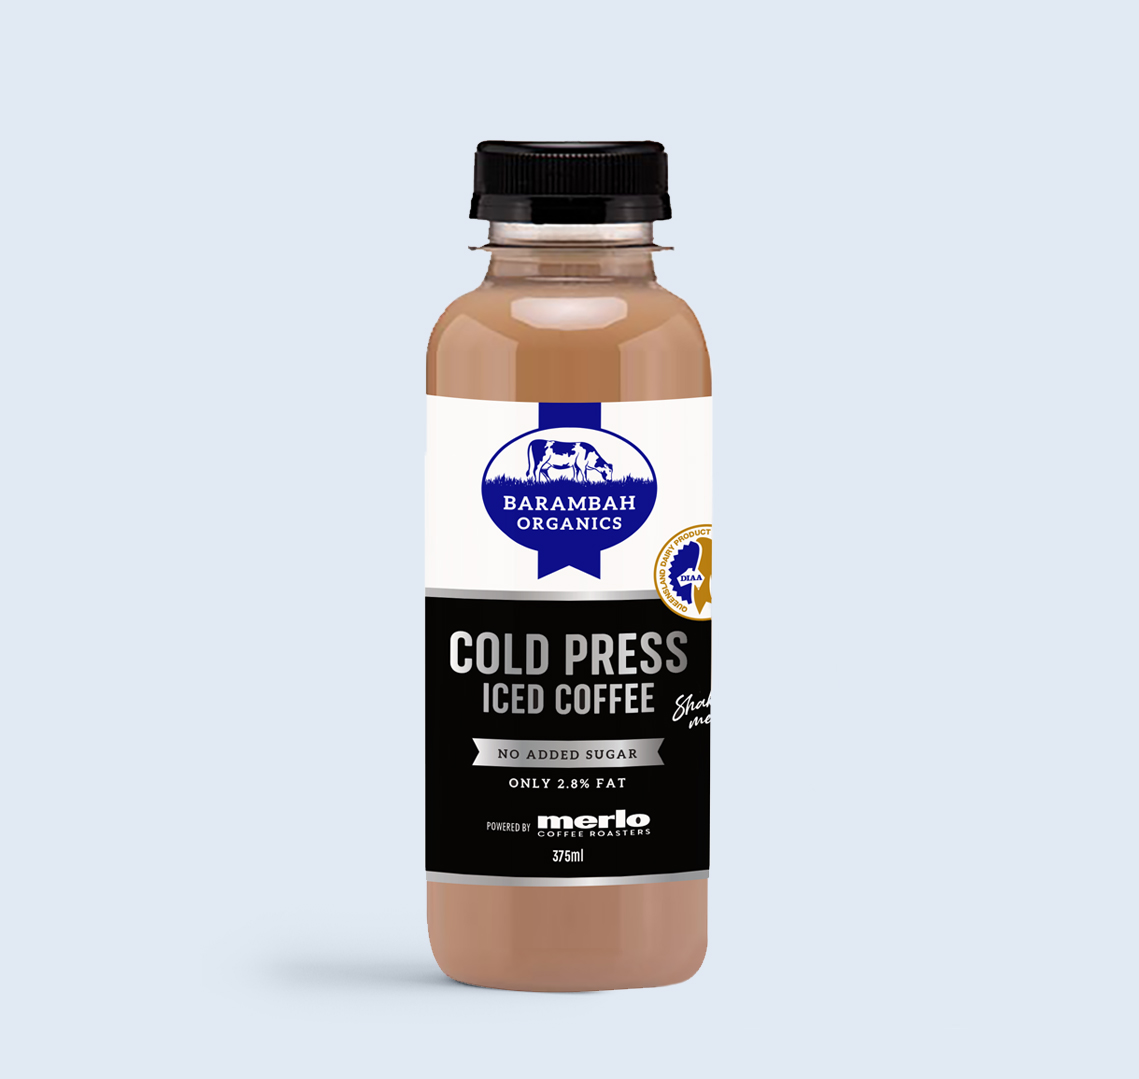 375ml of Cold Press Iced Coffee - Cold Press Coffee - Barambah Organics